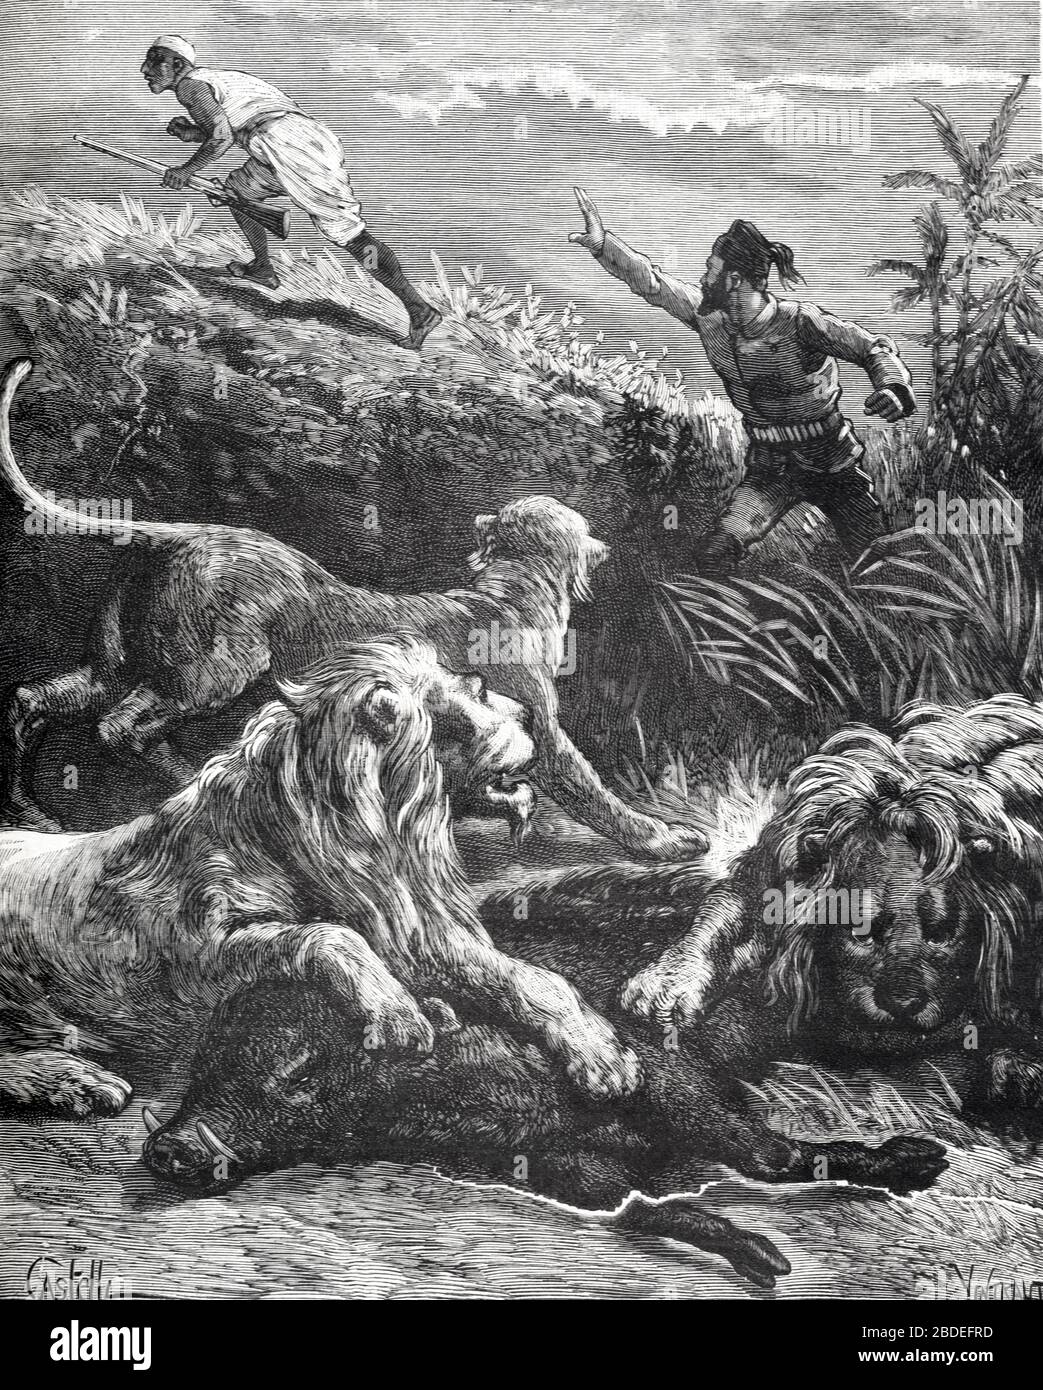 Lion Hunt or Lions Hunting Wild Pig or Hog in Africa. Vintage or Old Illustration or Engraving 1887 Stock Photo